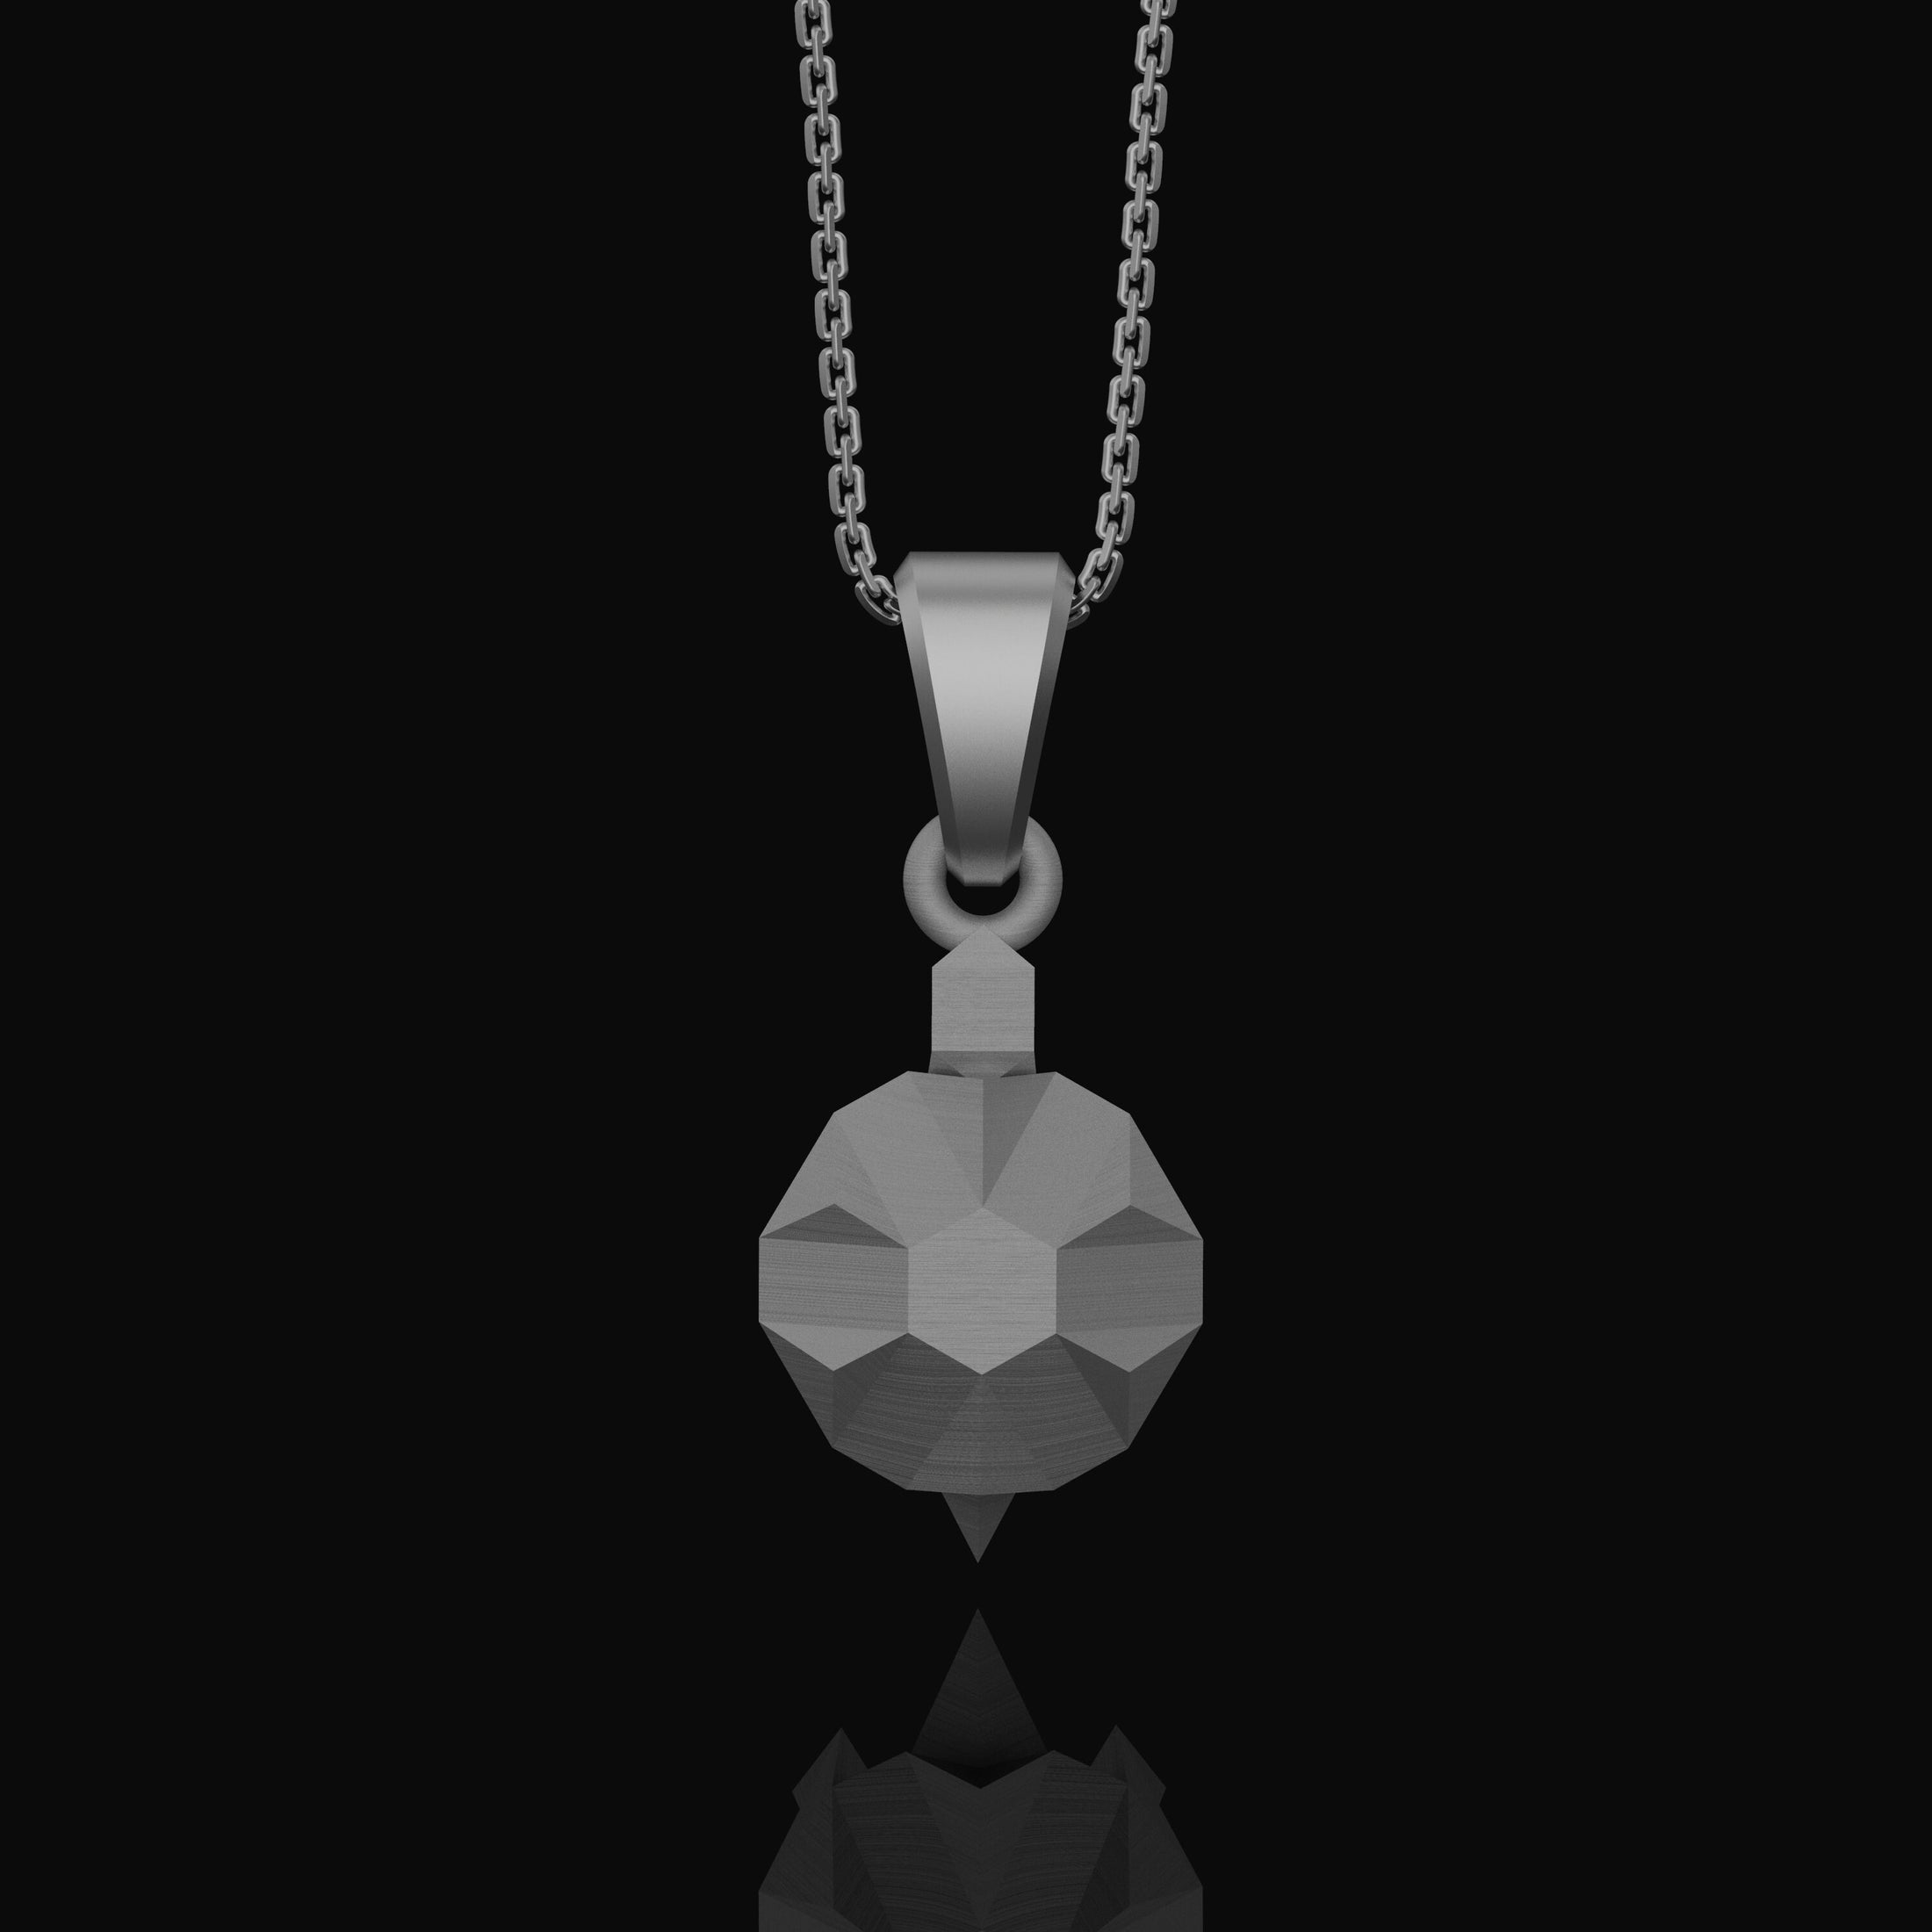 Origami Tortoise Charm Necklace - Silver Geometrical Pendant, Elegant Folded Turtle Design, Unique Artistic Jewelry Polished Matte